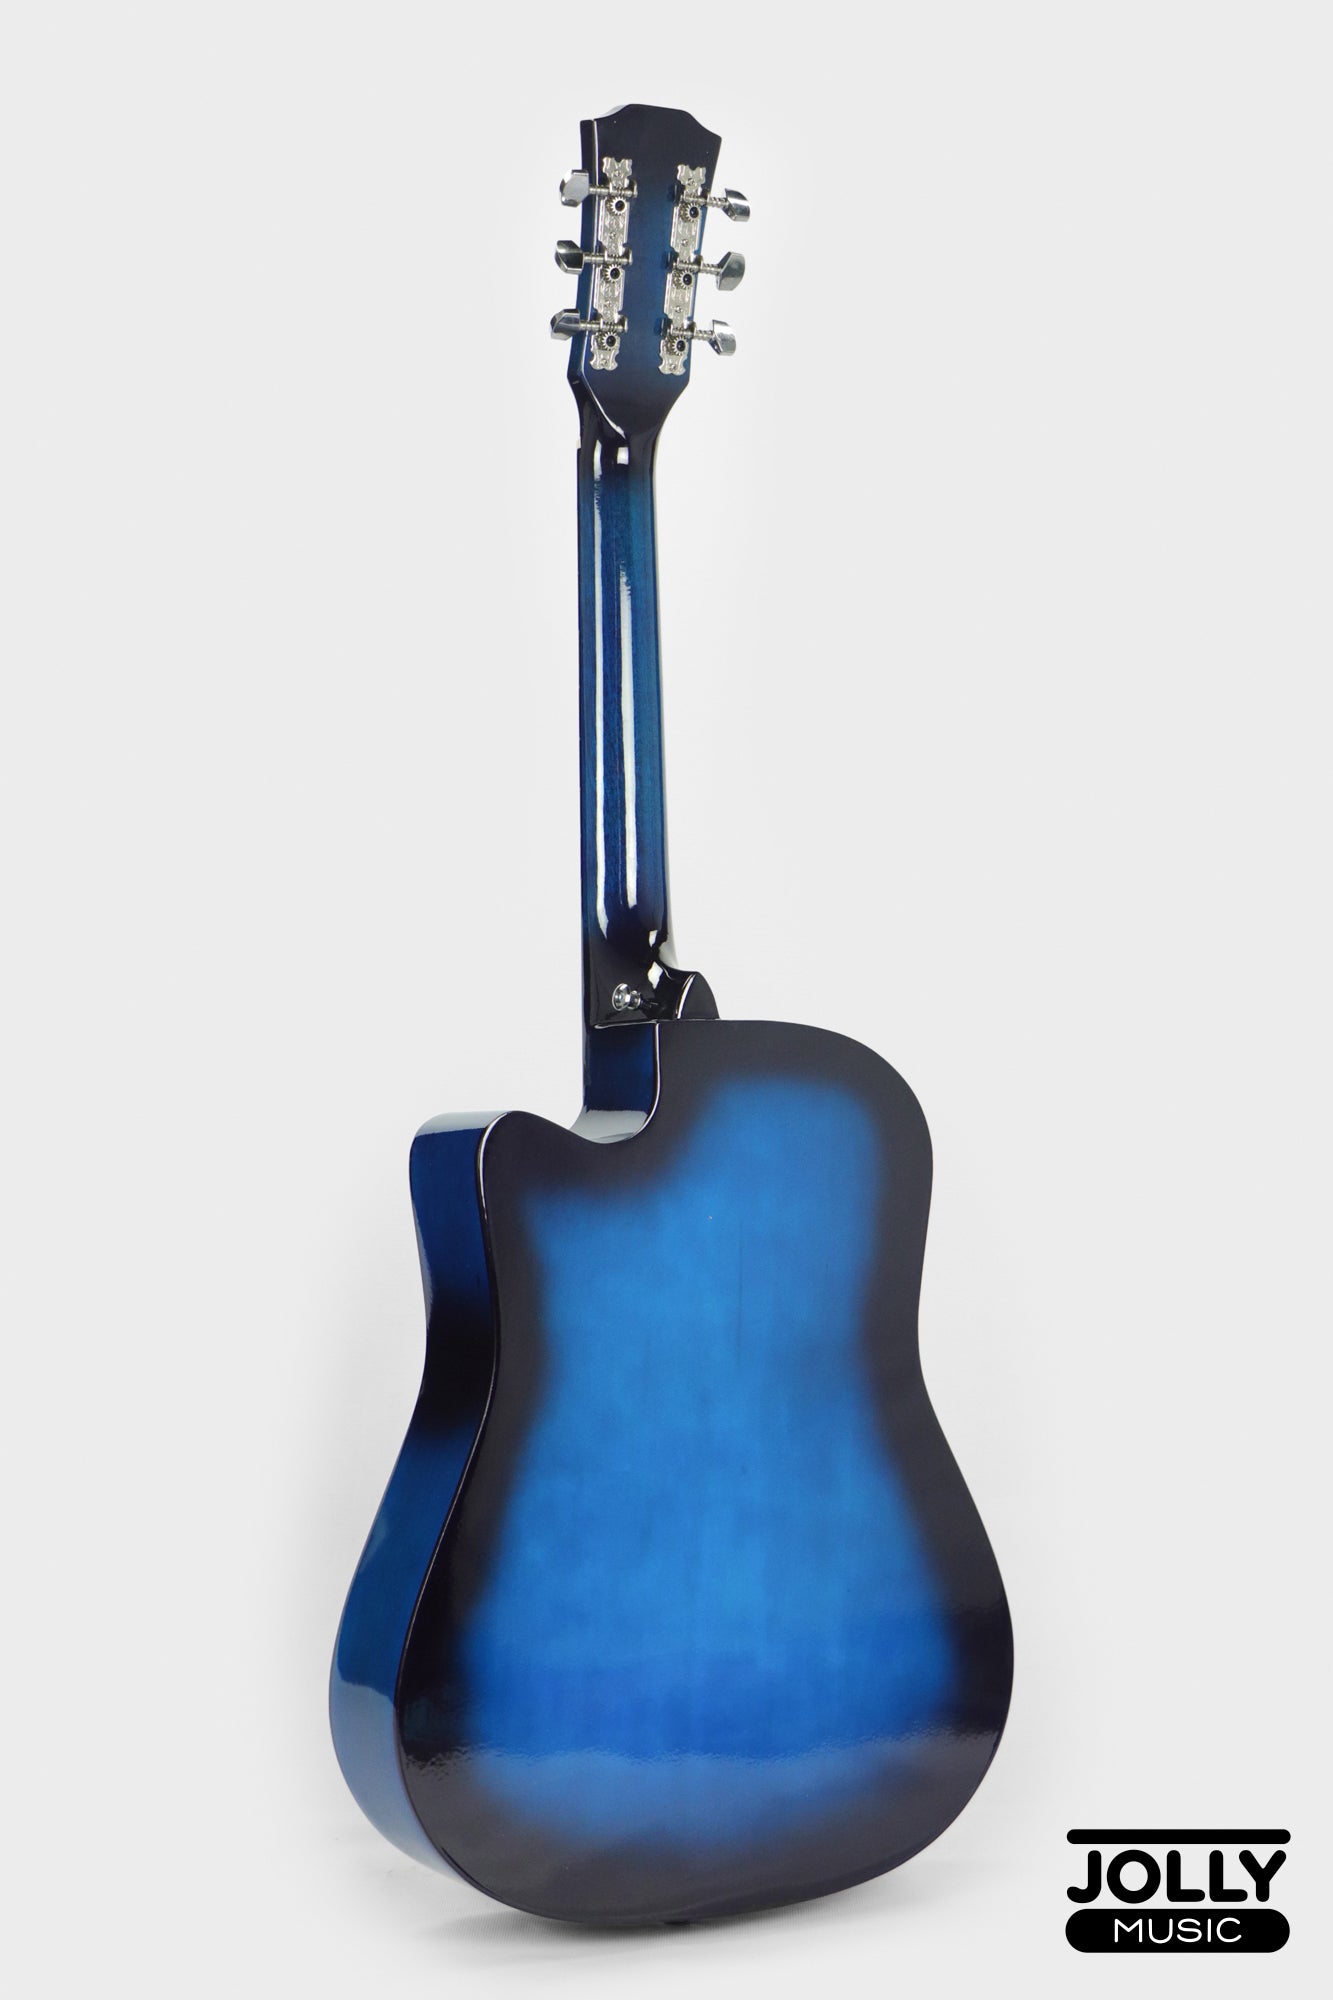 Baccero 38" Guitar K-38LT Truss Rod w/ Case, 3 Picks, Tuner, Capo - Blue Burst